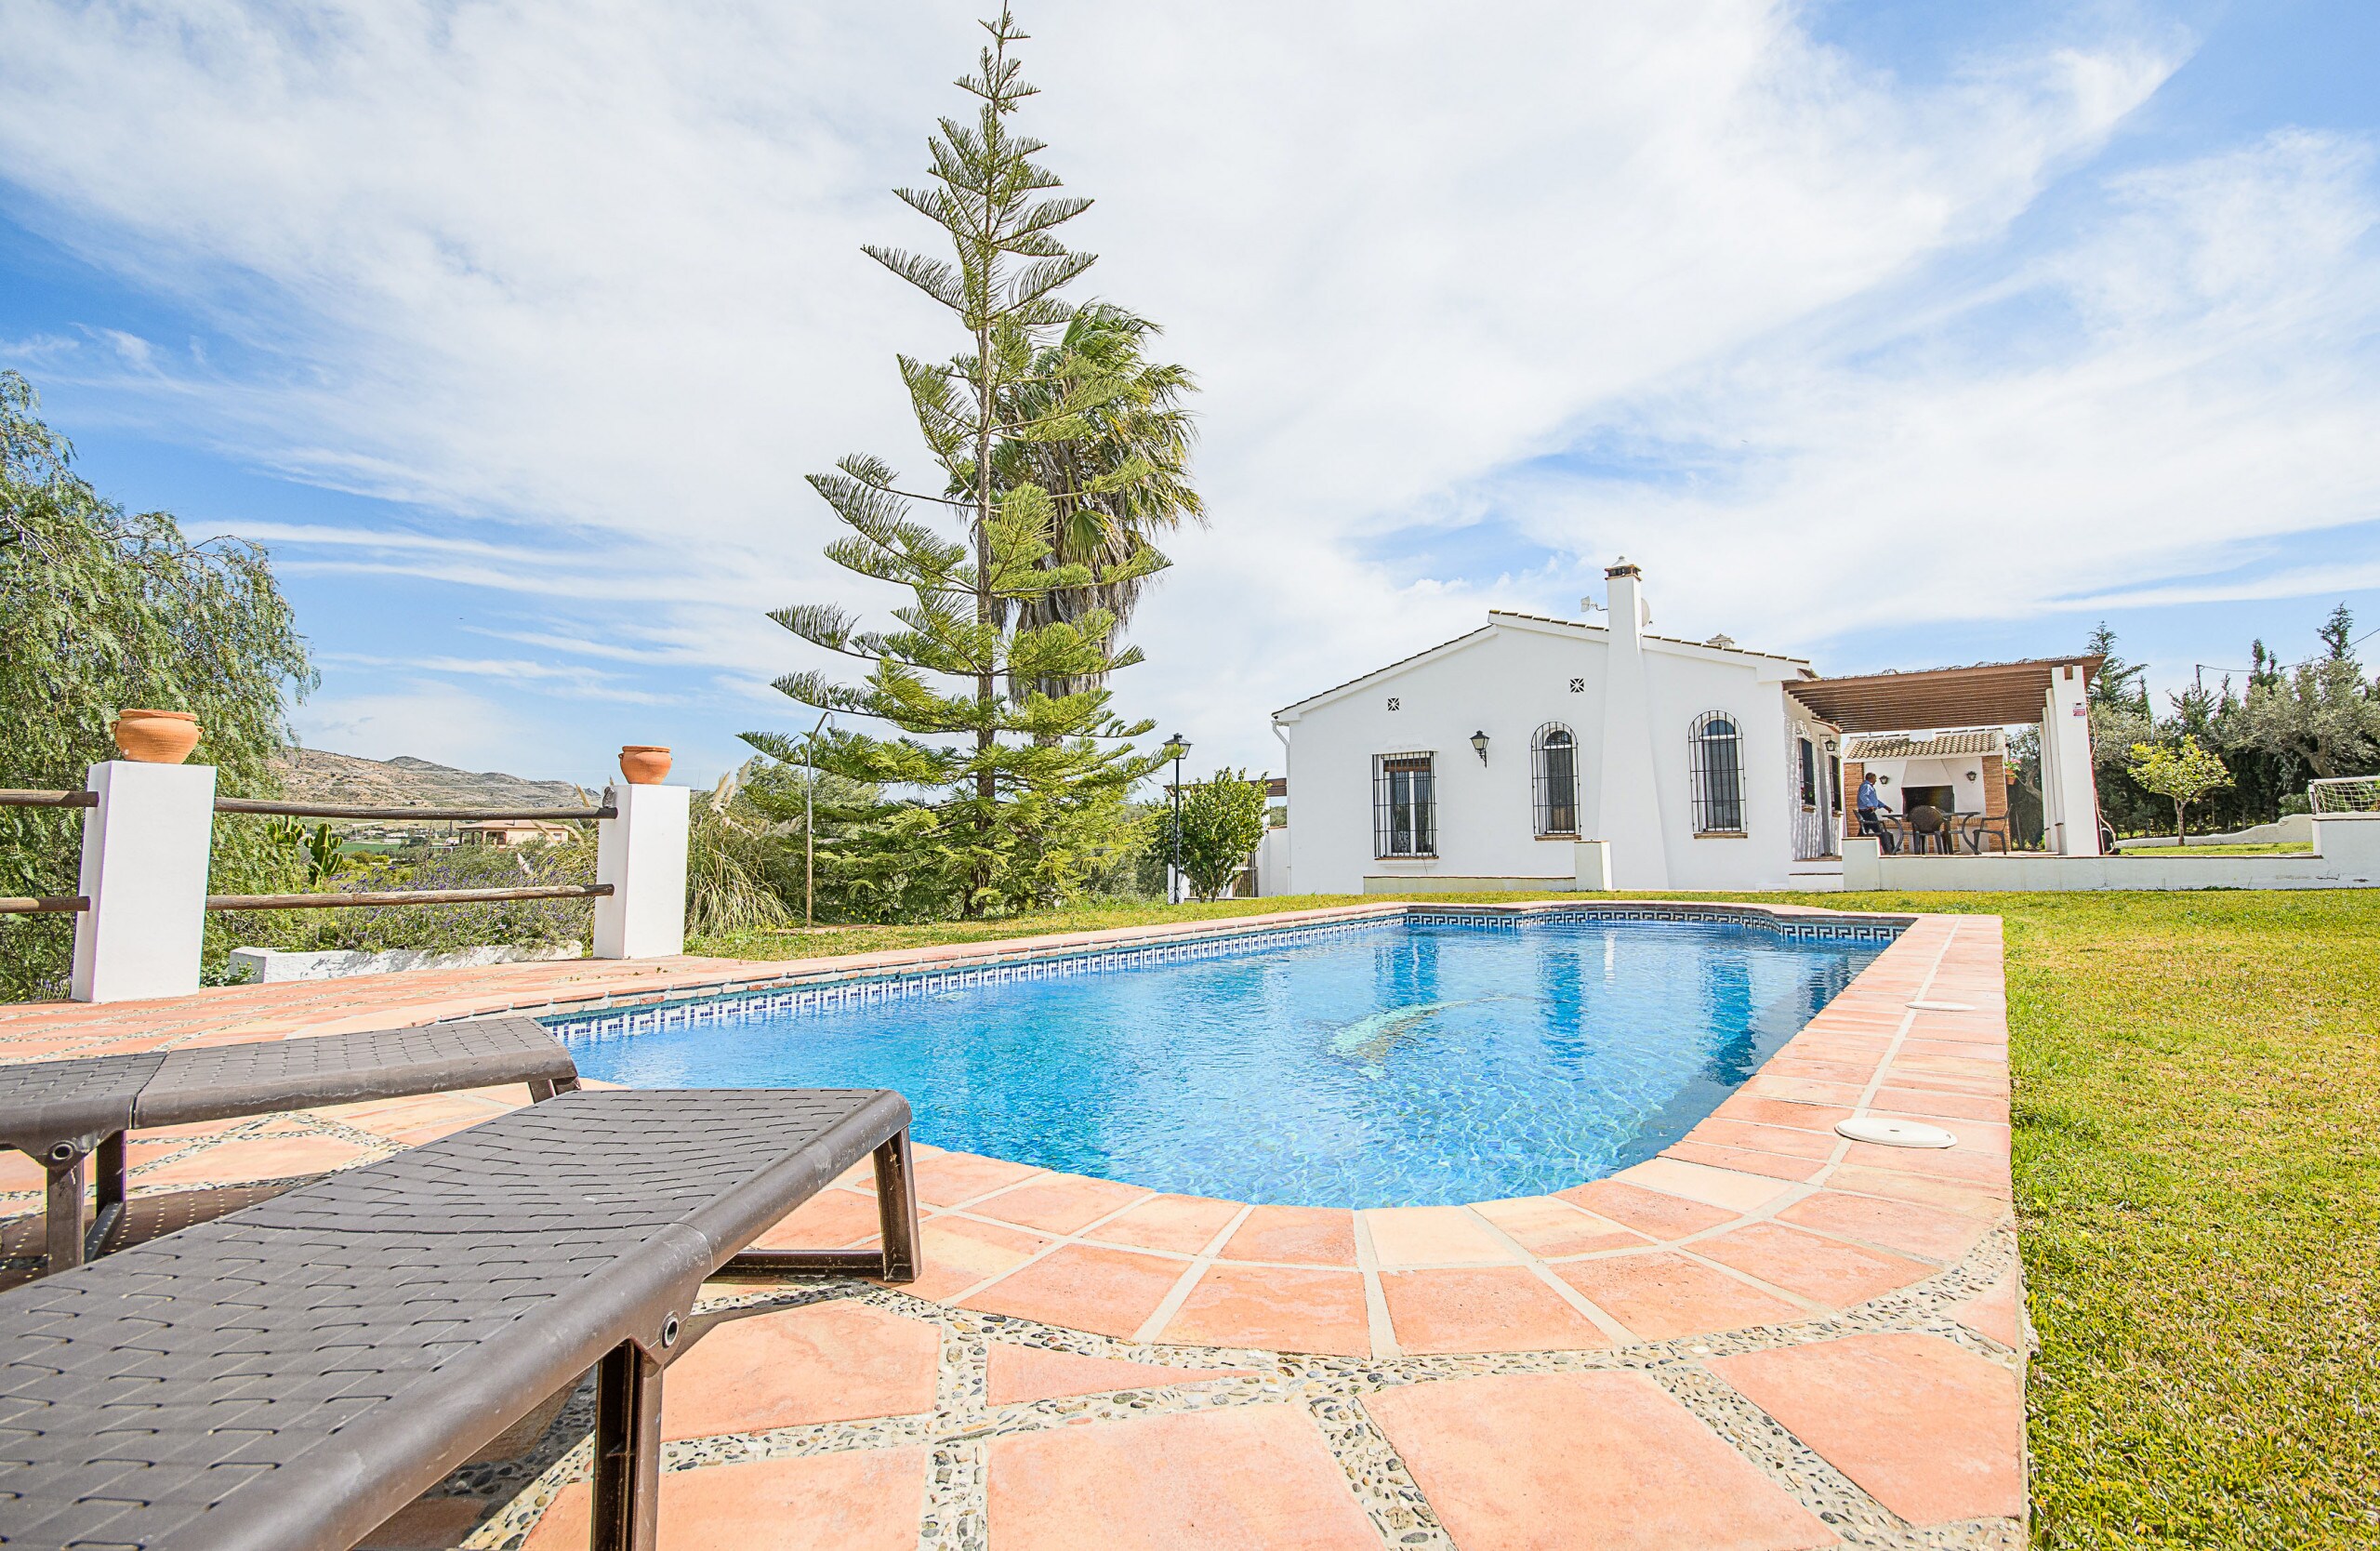 Enjoy the pool of this house in Alhaurín el Grande